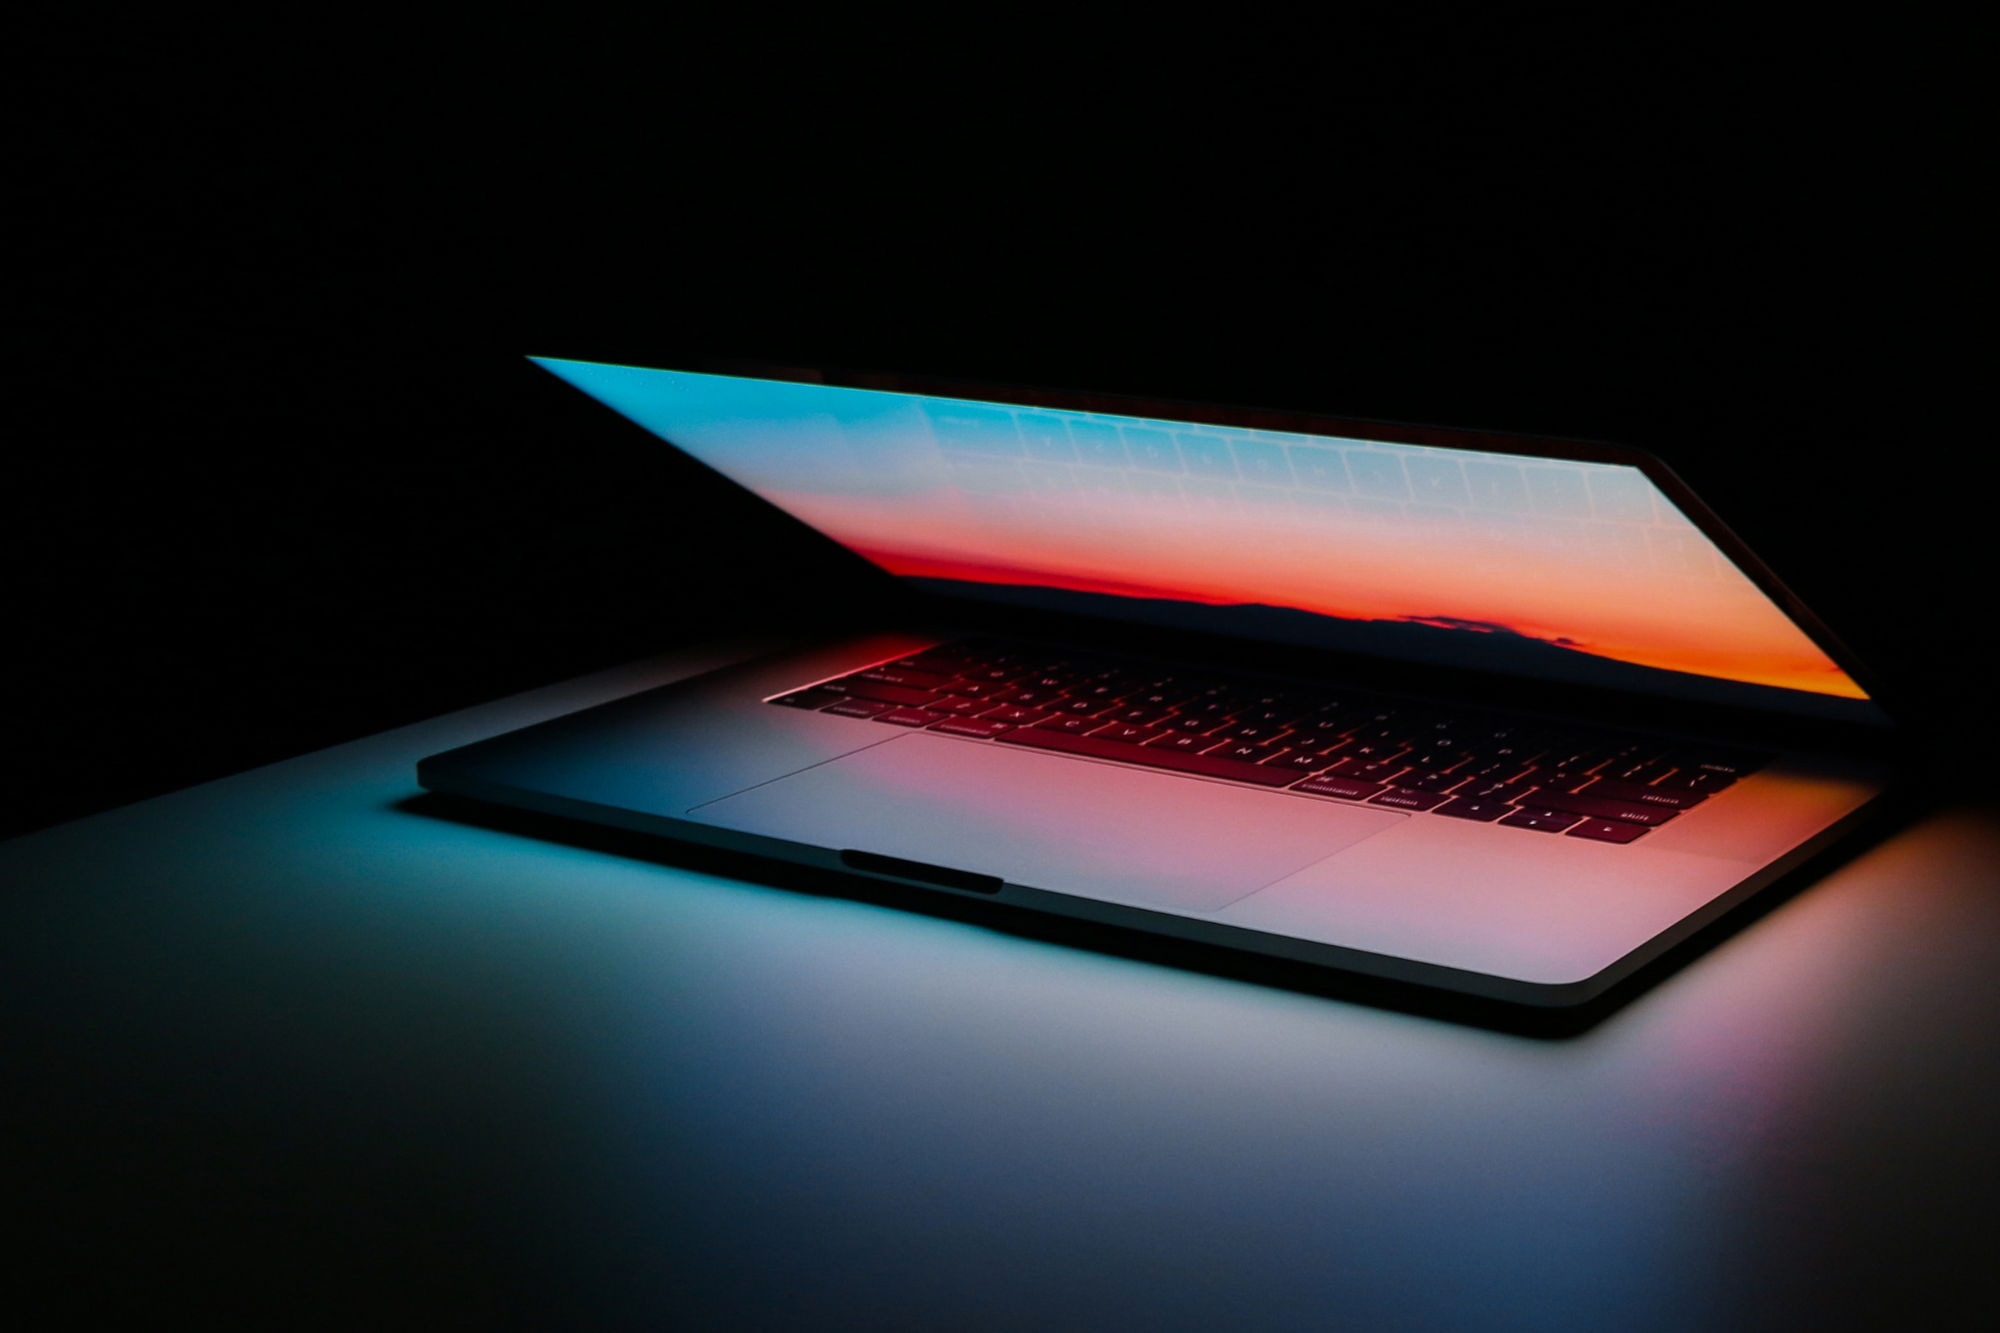 Decorative background image of a laptop